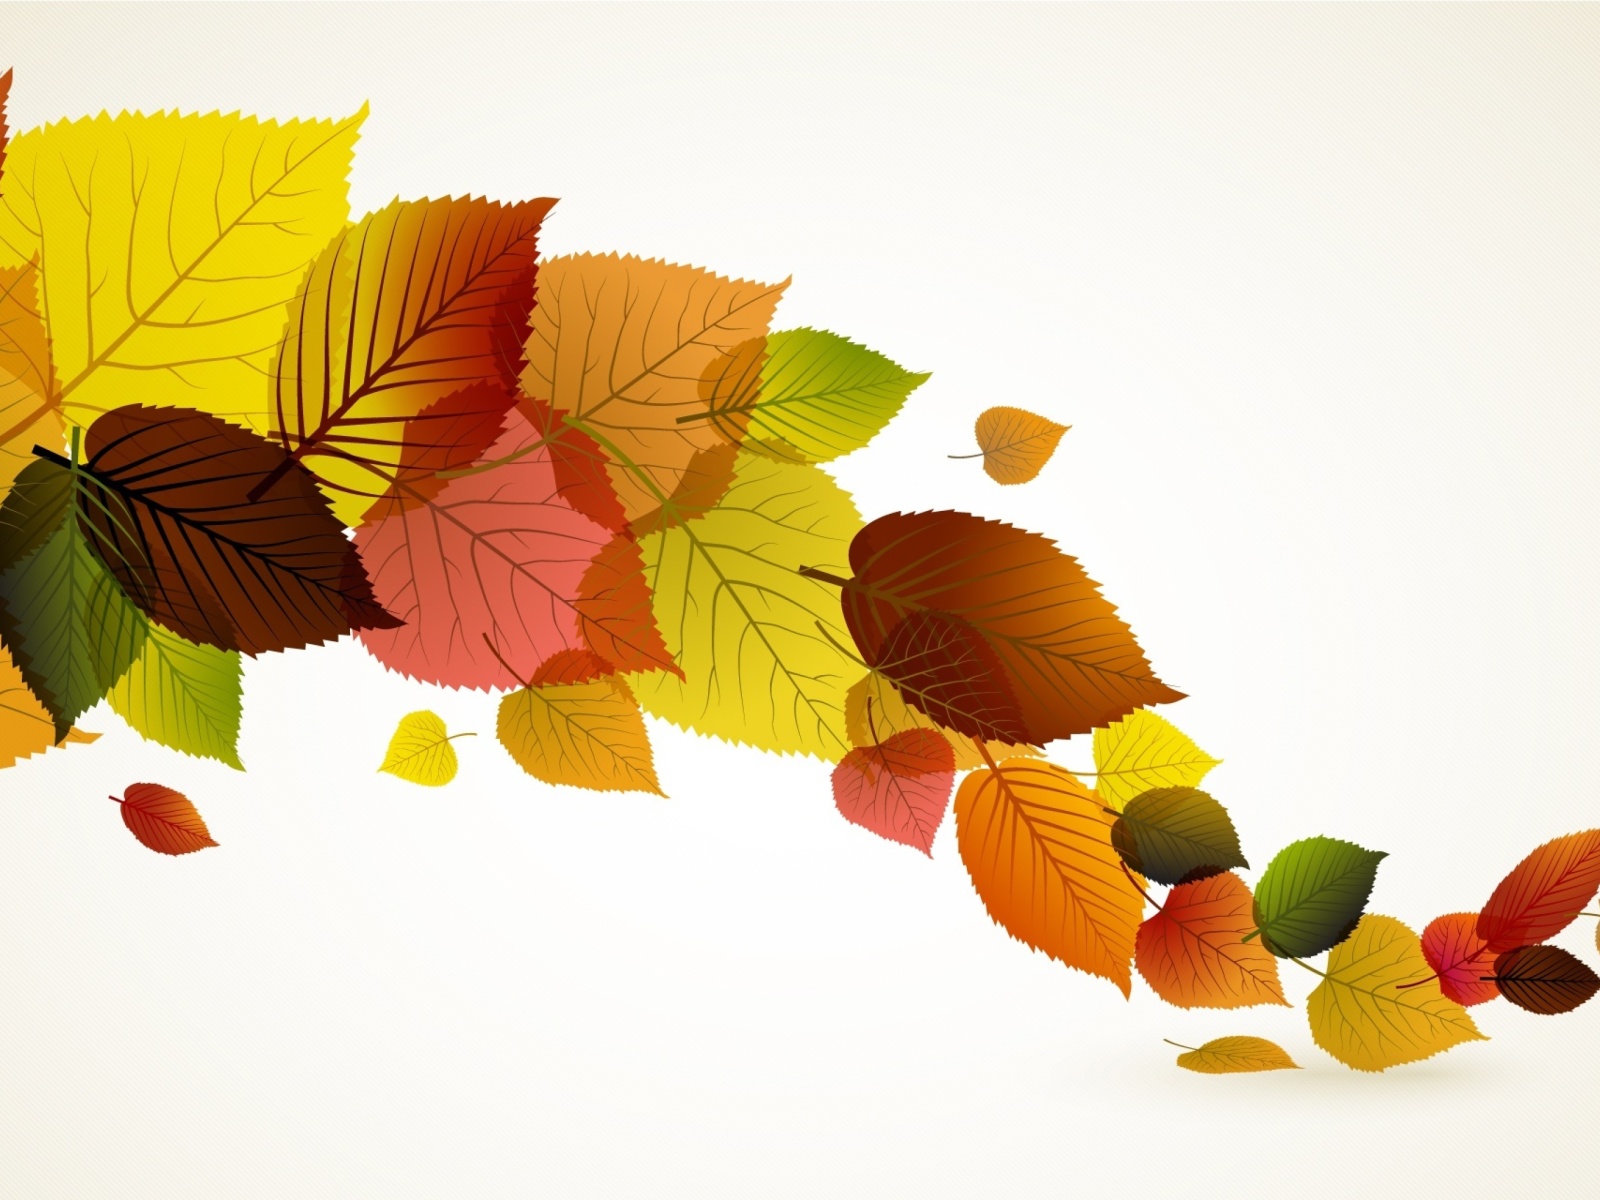 Drawn autumn leaves screenshot #1 1600x1200